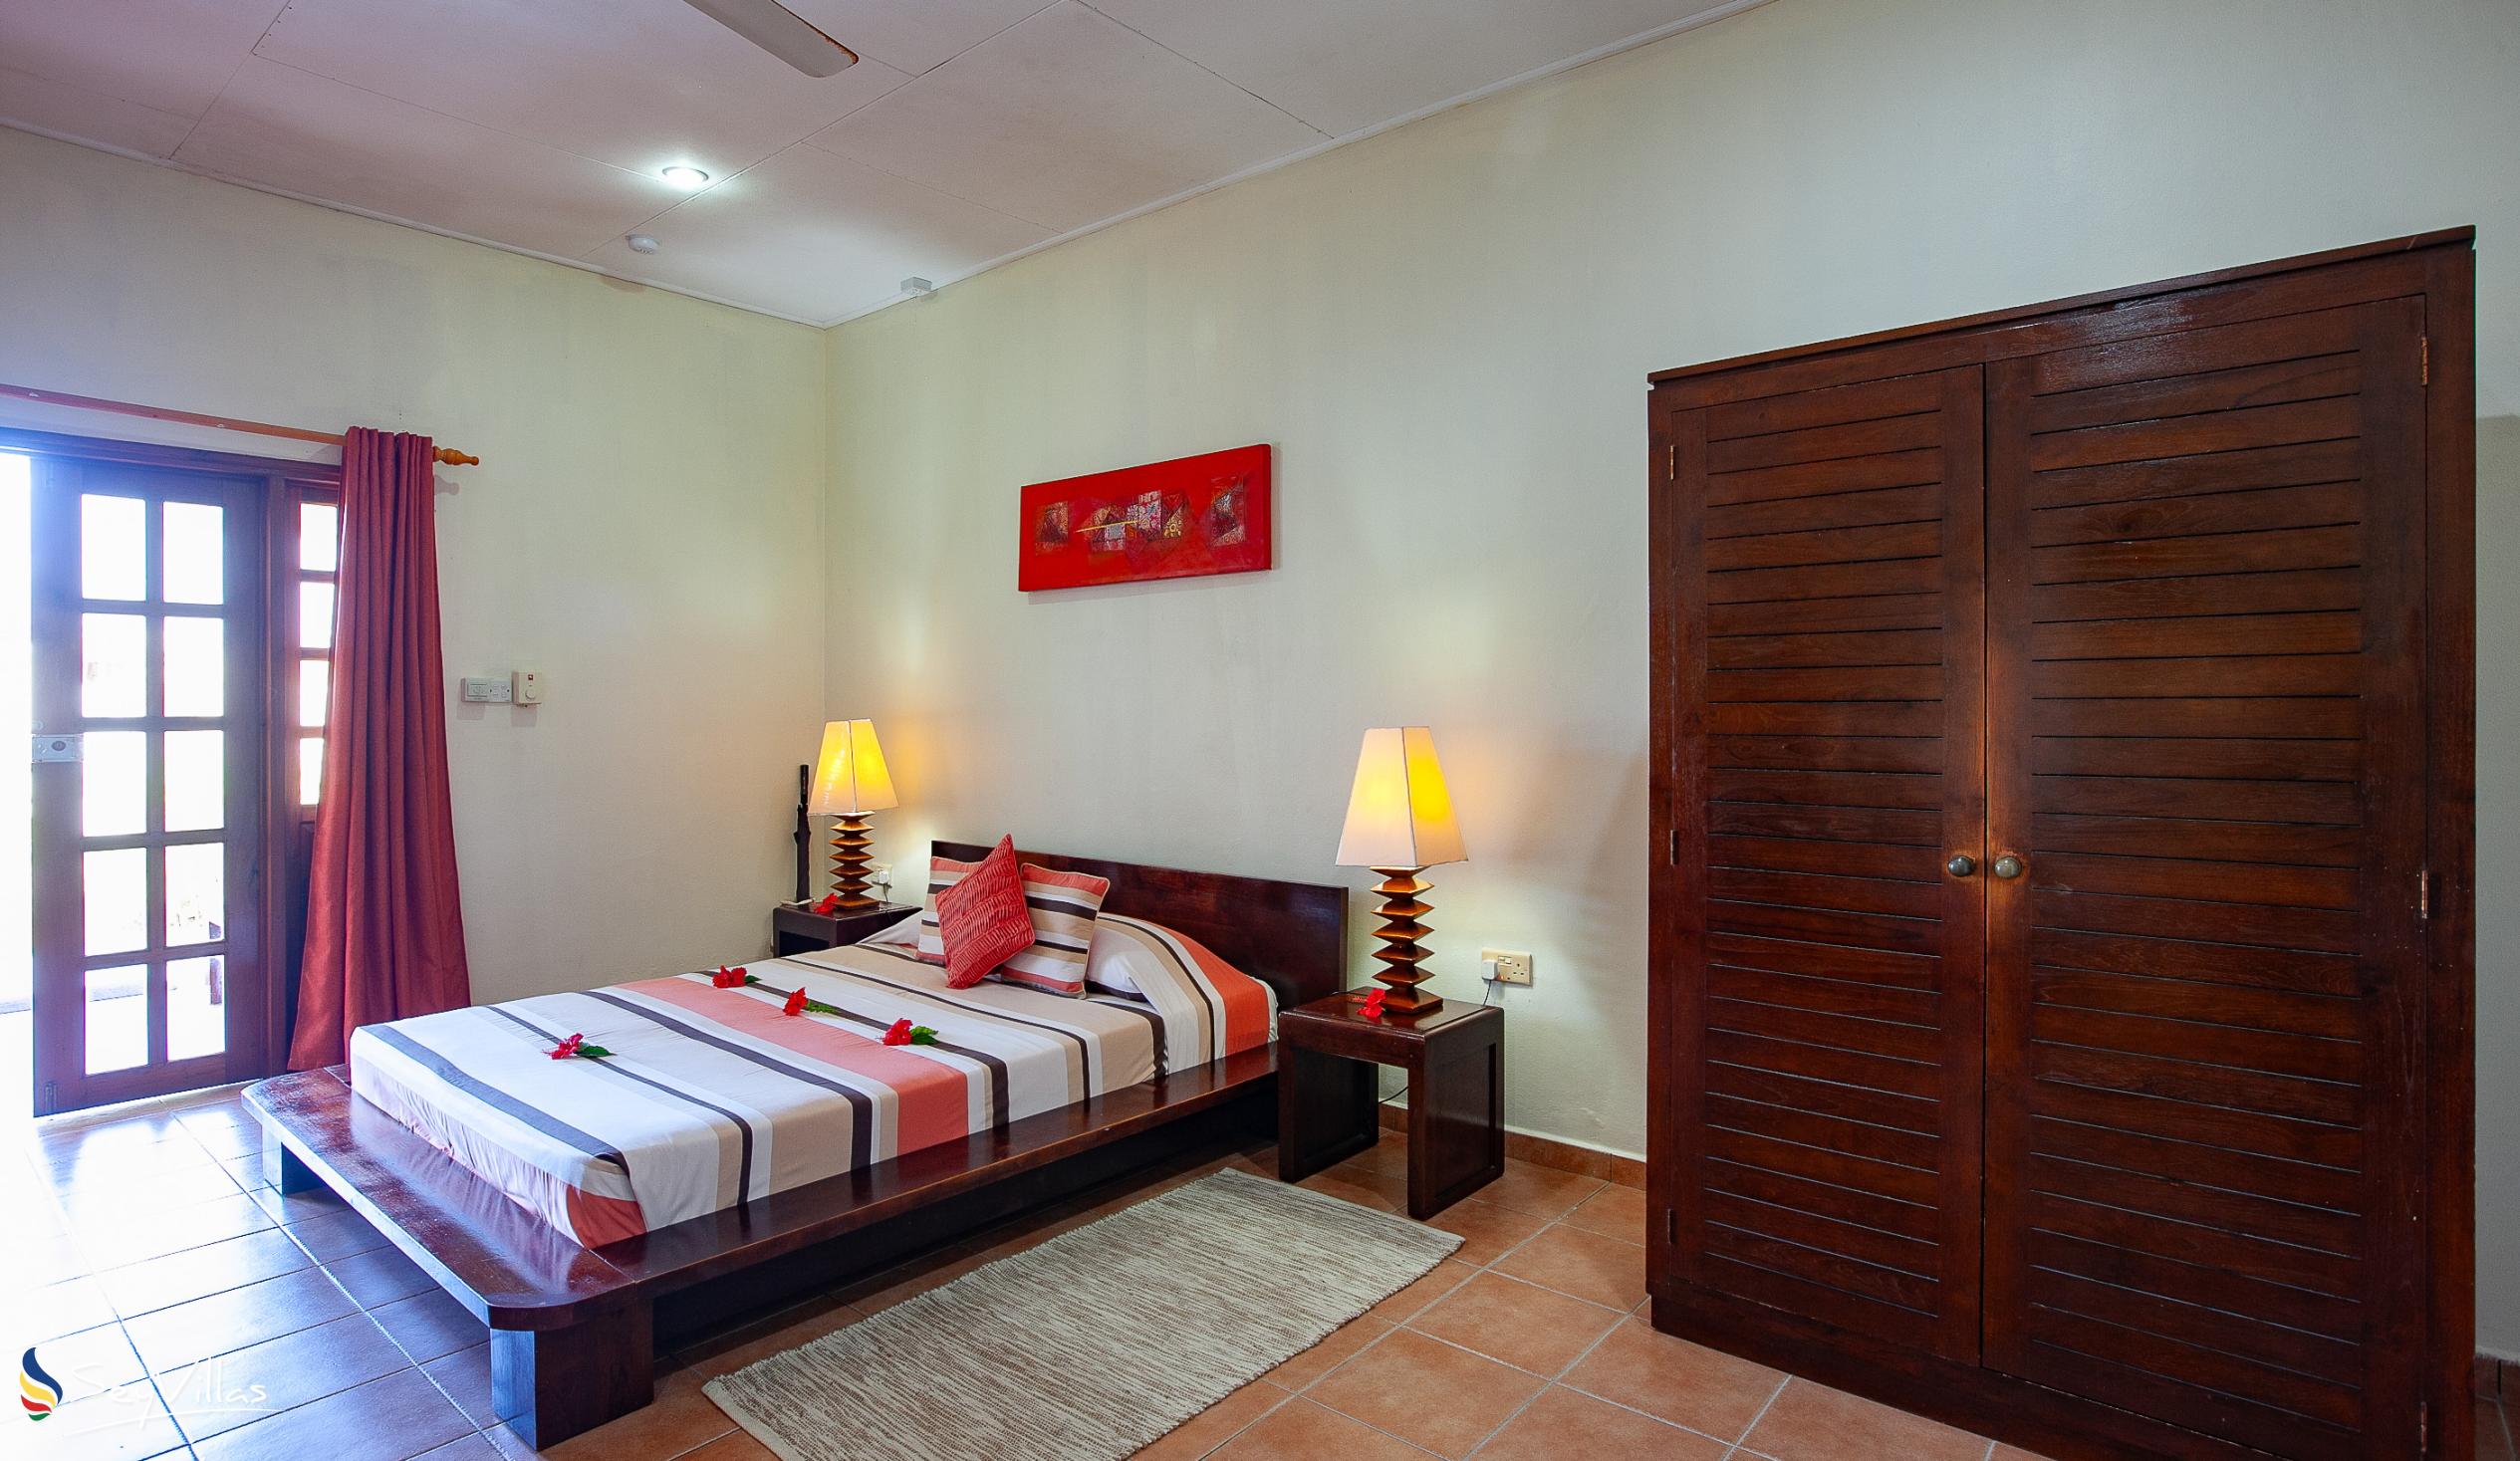 Foto 42: Britannia Hotel - Chambre Familiale Supérieure - Praslin (Seychelles)